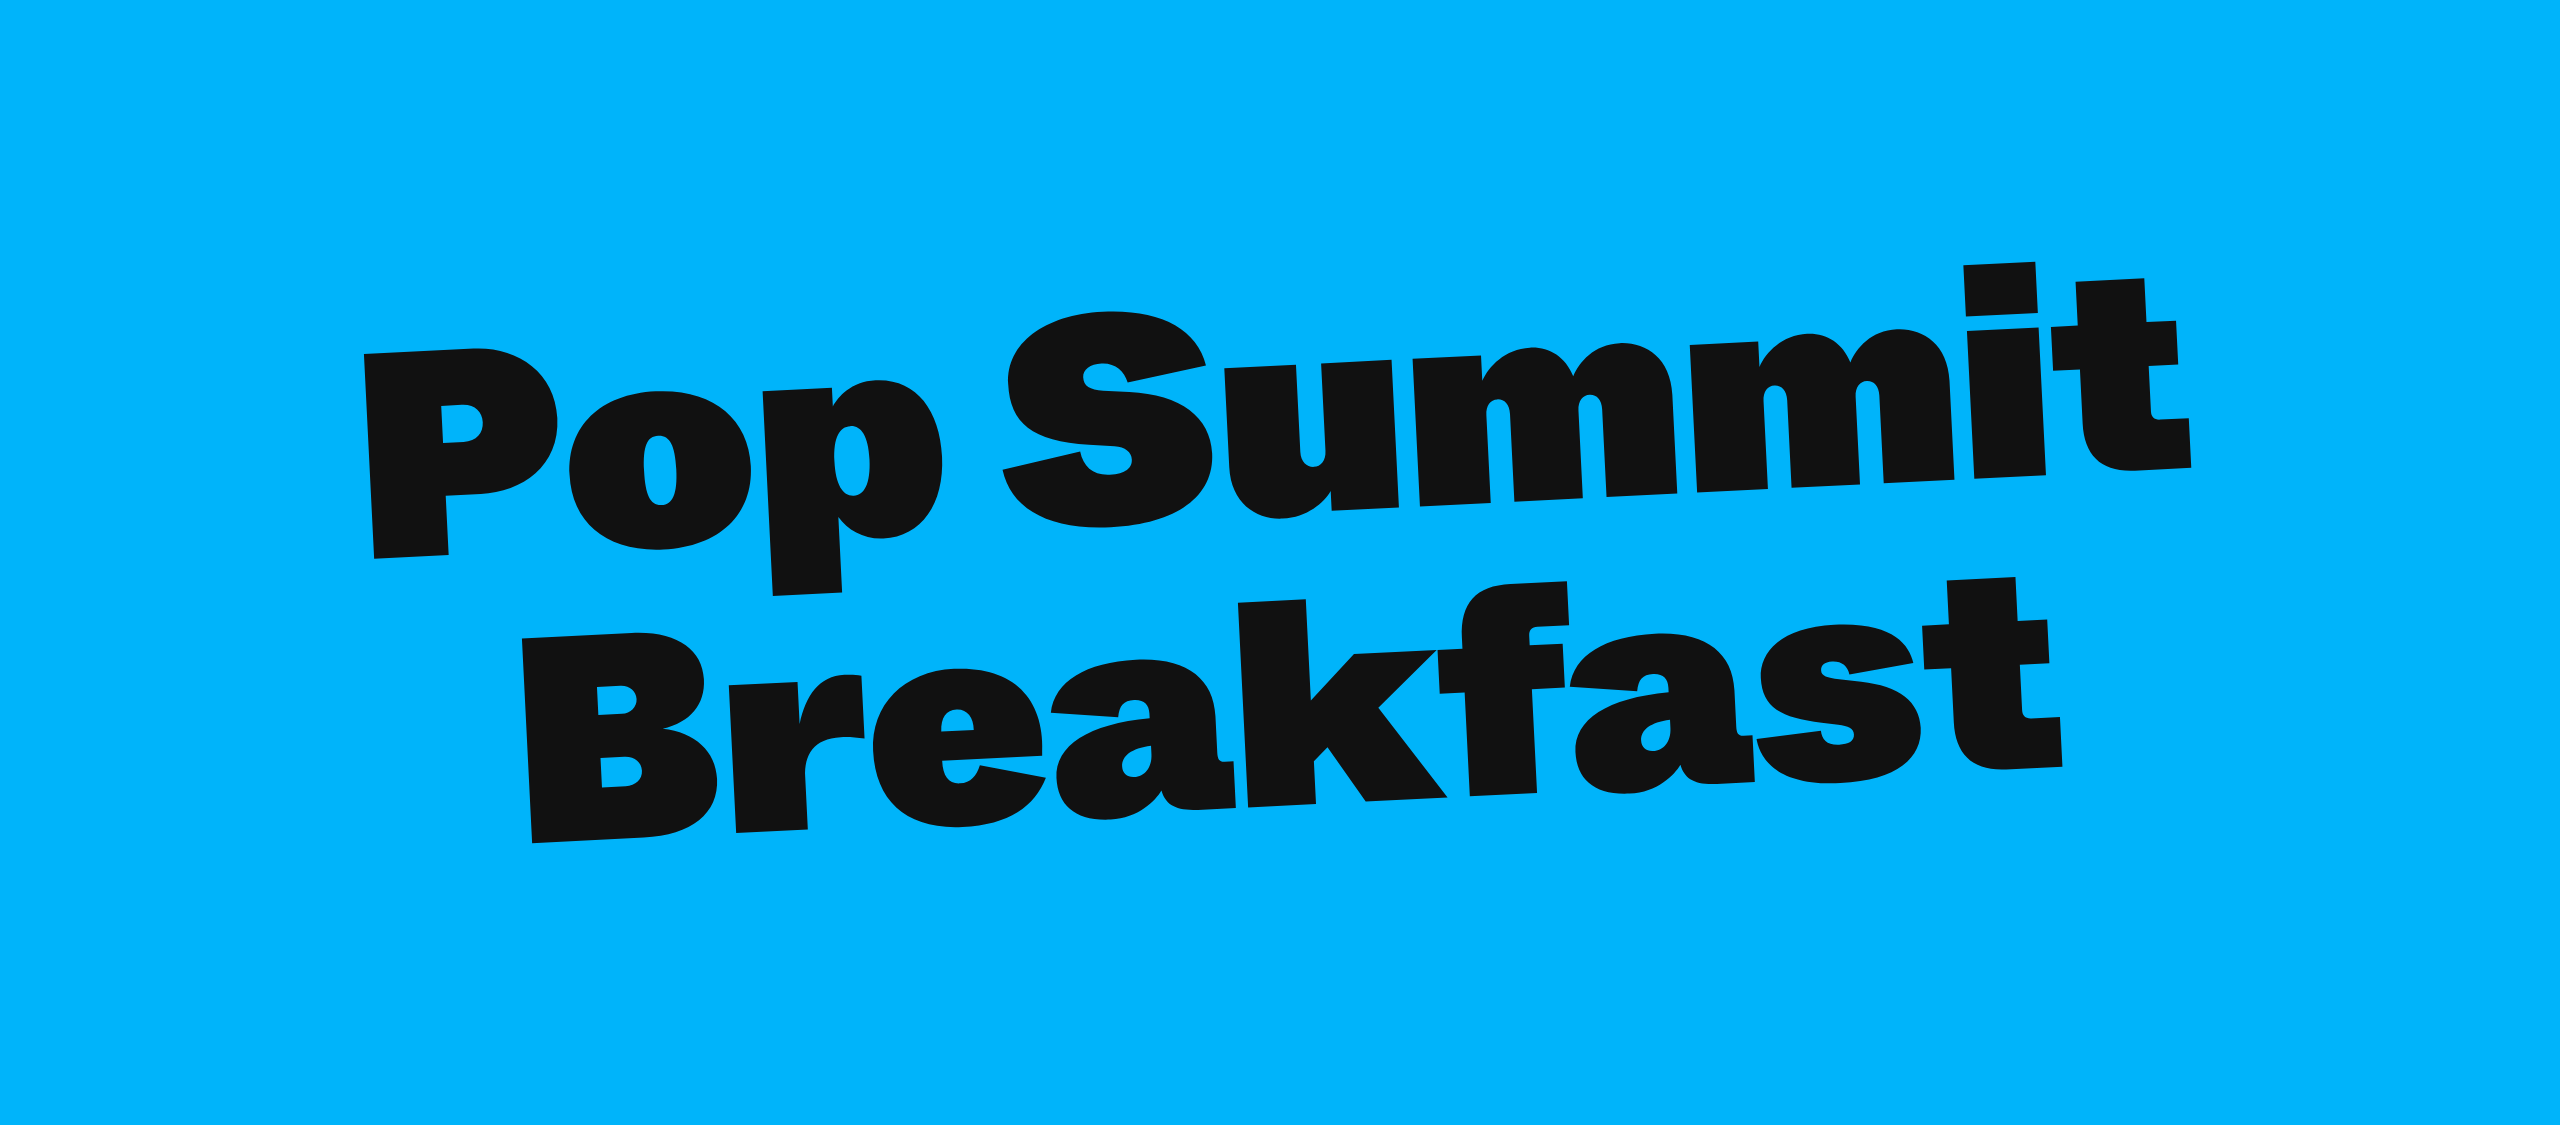 Pop Summit Breakfast